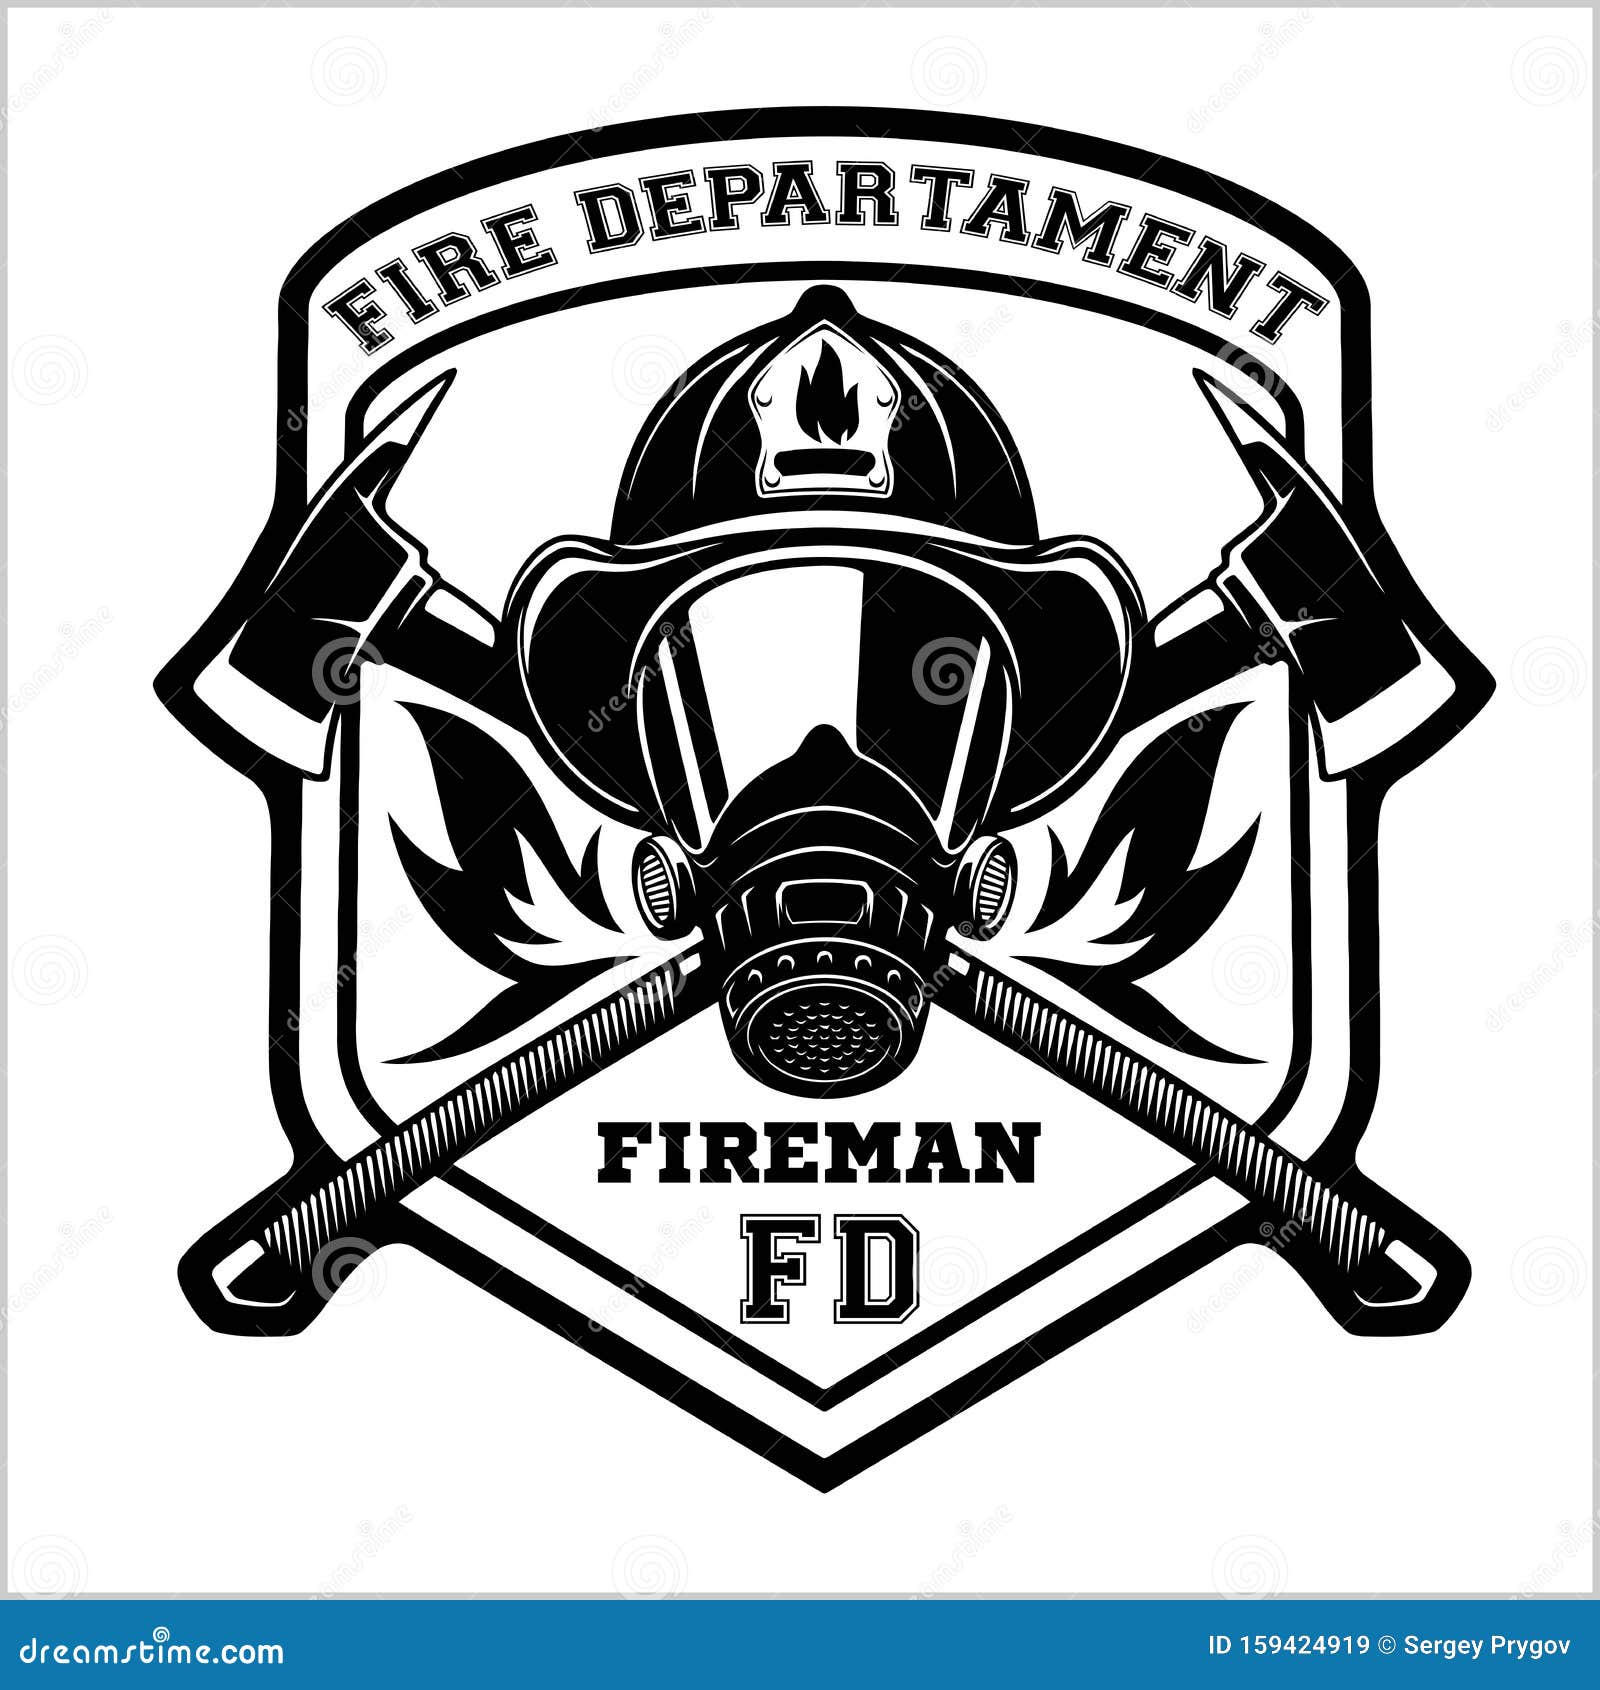 fire department emblem - badge, logo on white background -  .